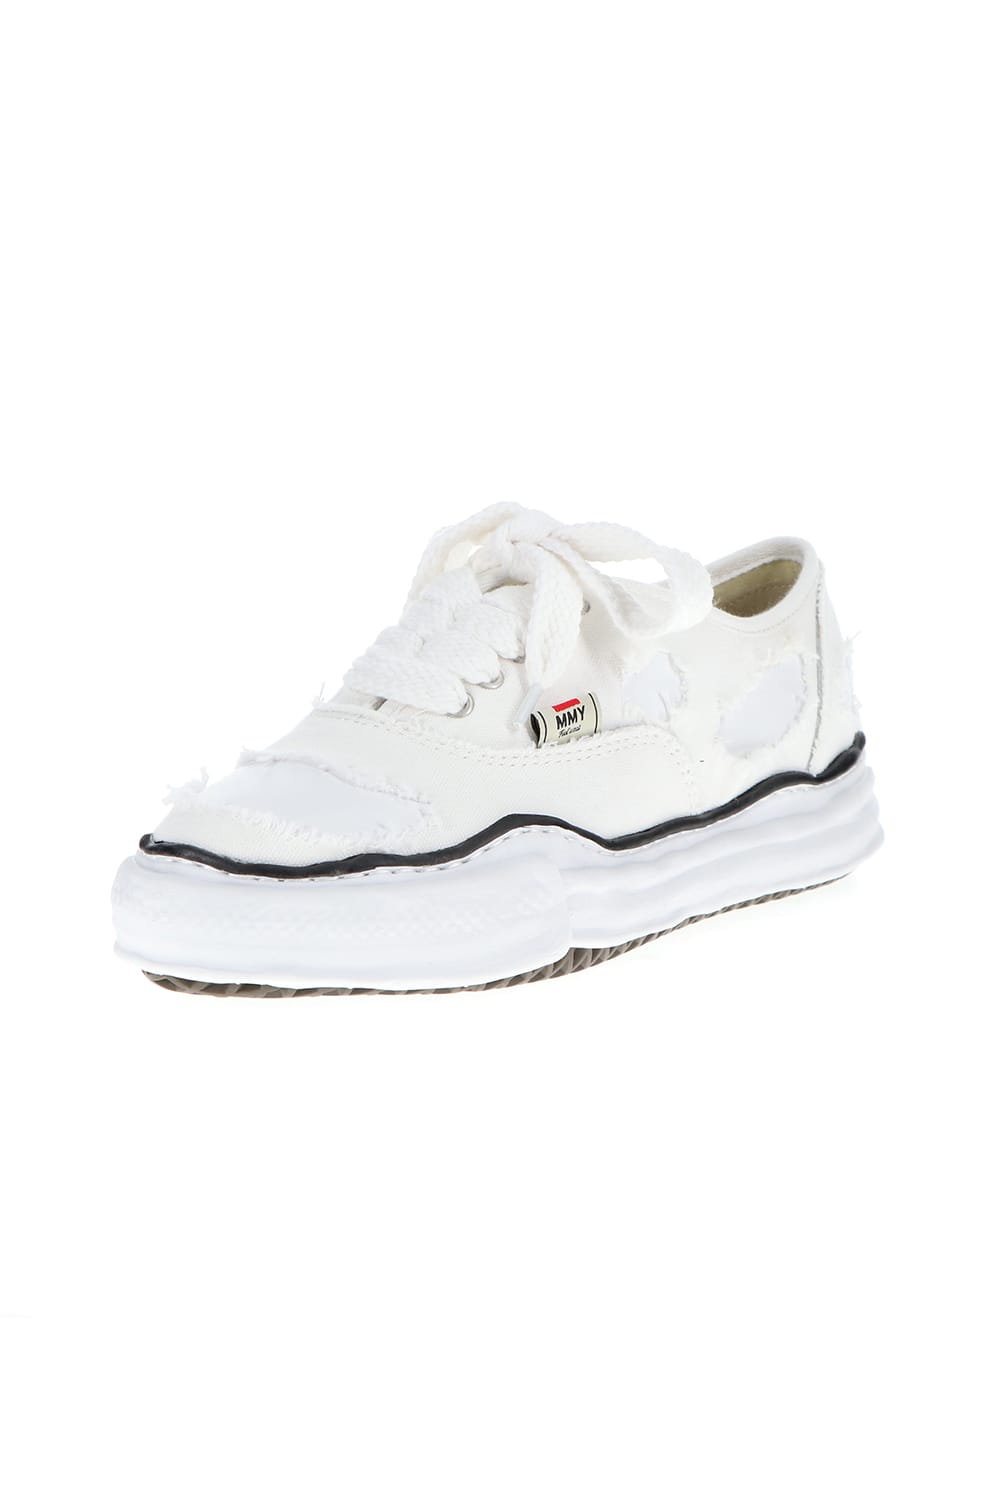 -BAKER- Original sole broken canvas Low-Top sneakers White